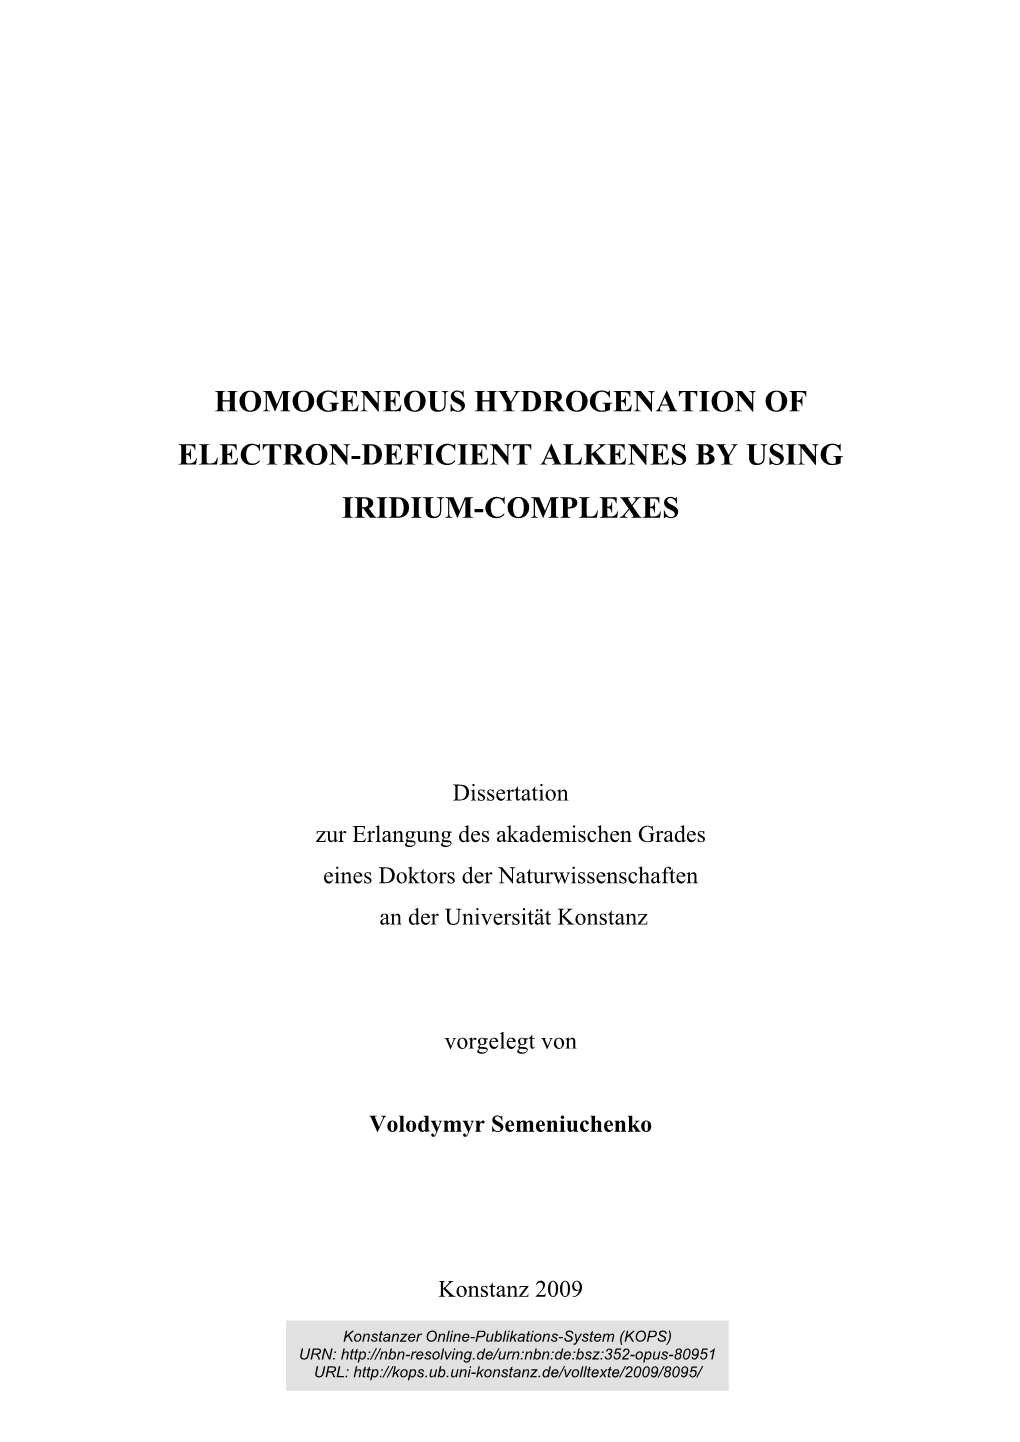 Homogeneous Hydrogenation of Electron-Deficient Alkenes by Using Iridium-Complexes